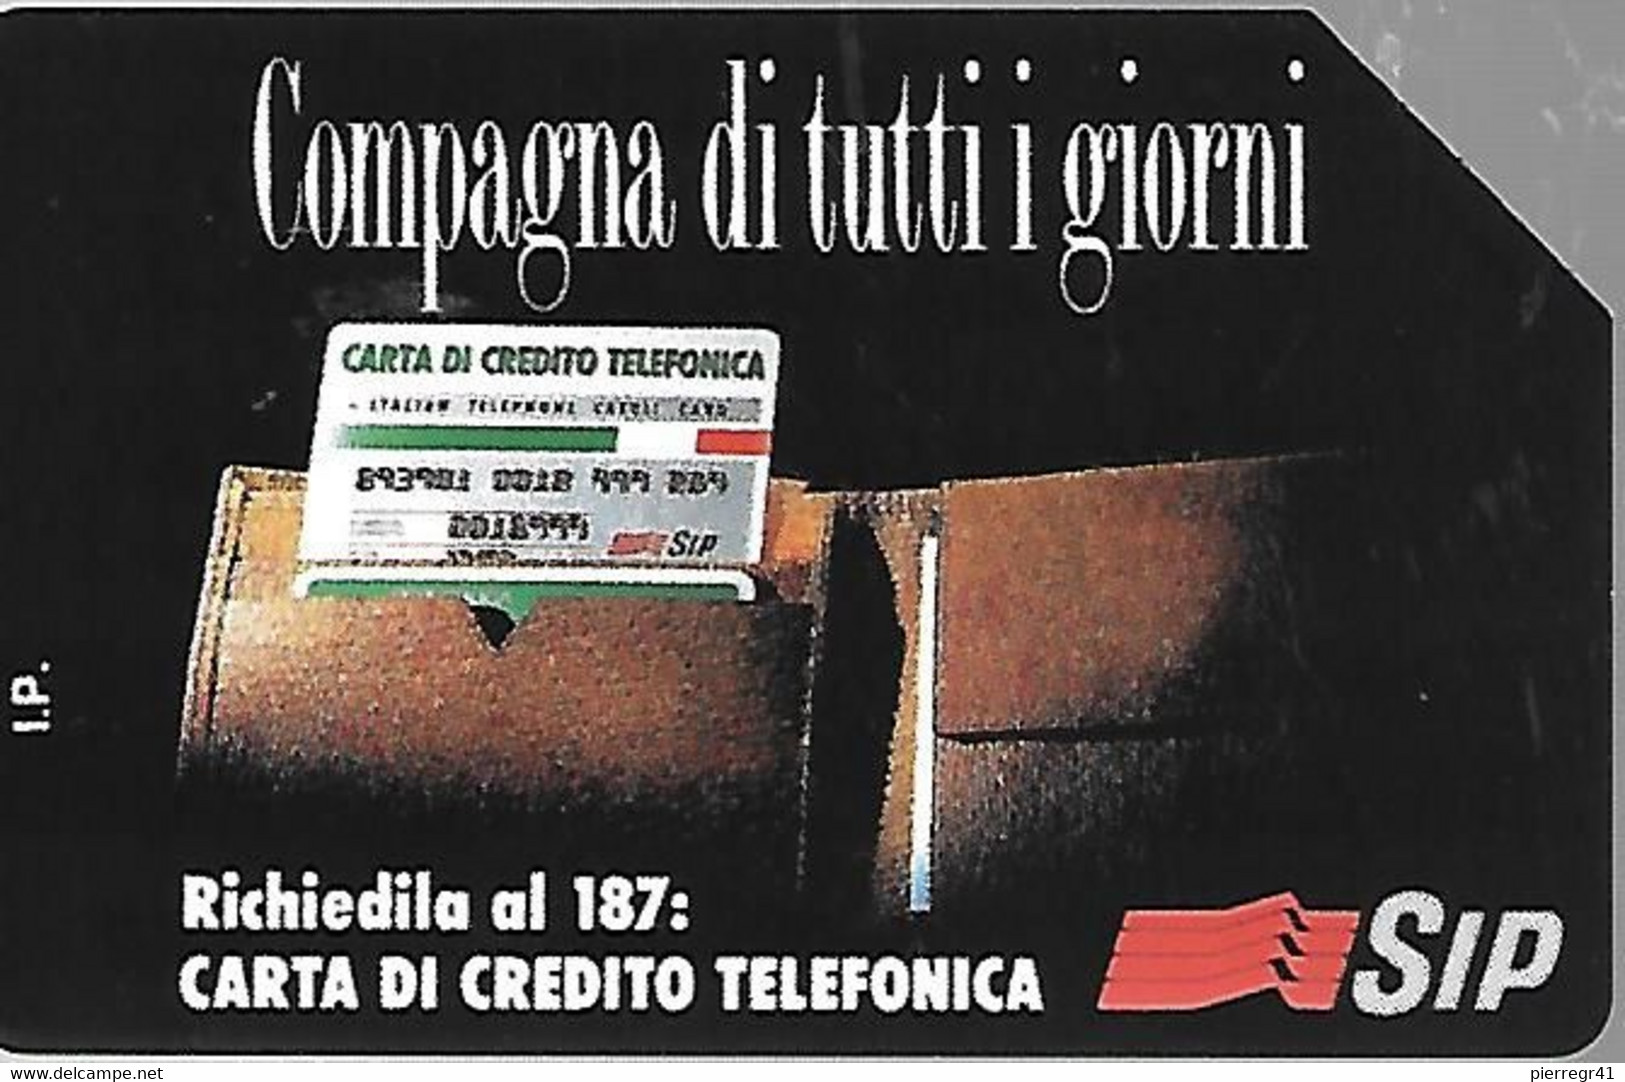 CARTE -ITALIE-Serie Pubblishe Figurate-Campagna-215-Catalogue Golden-15000L/30/06/95- -Utilisé-TBE-RARE - Public Precursors